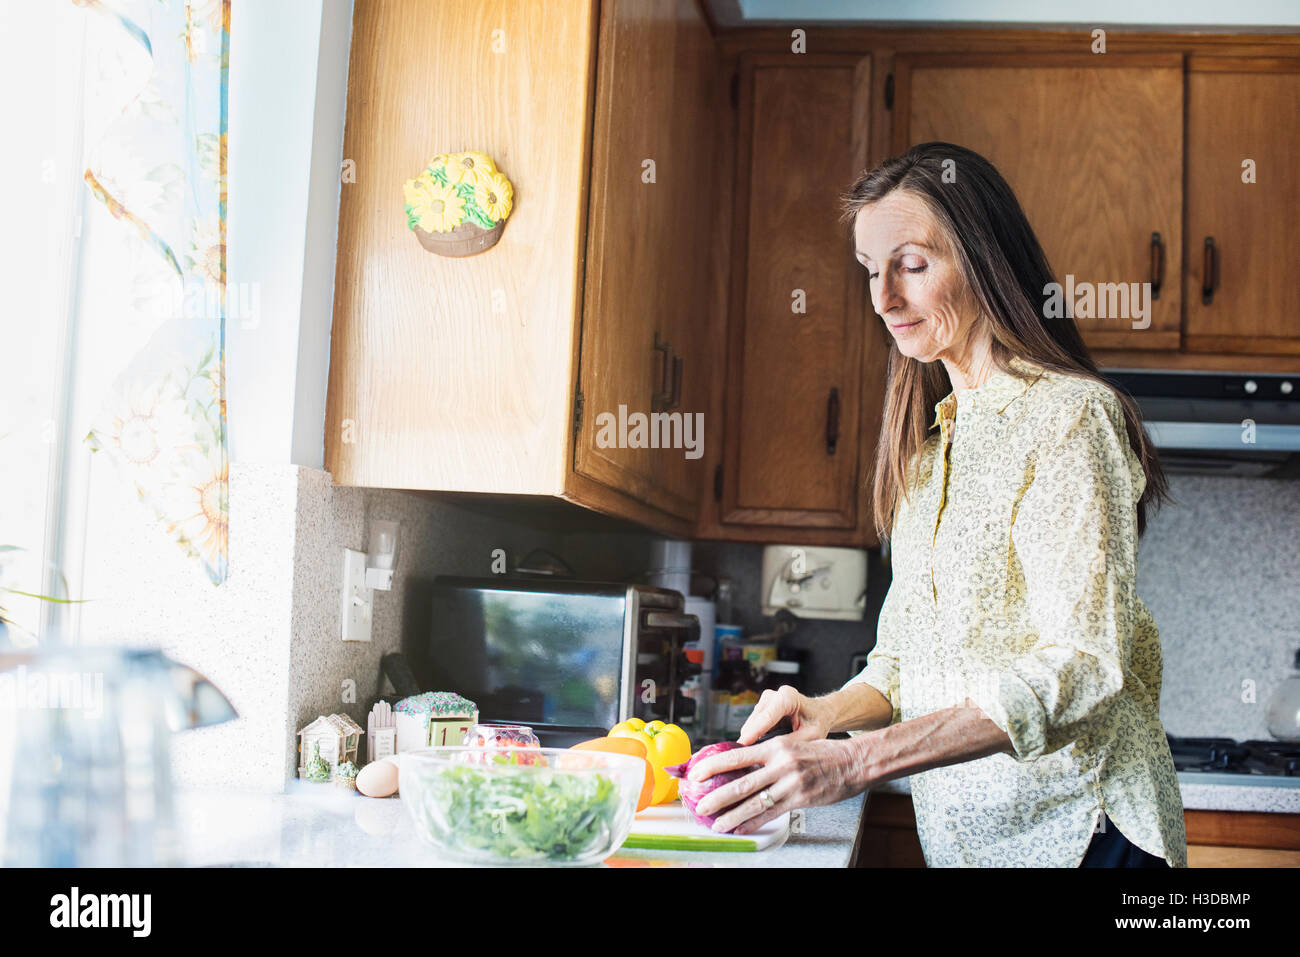 Senior woman standing in a kitchen, preparing food. Stock Photo